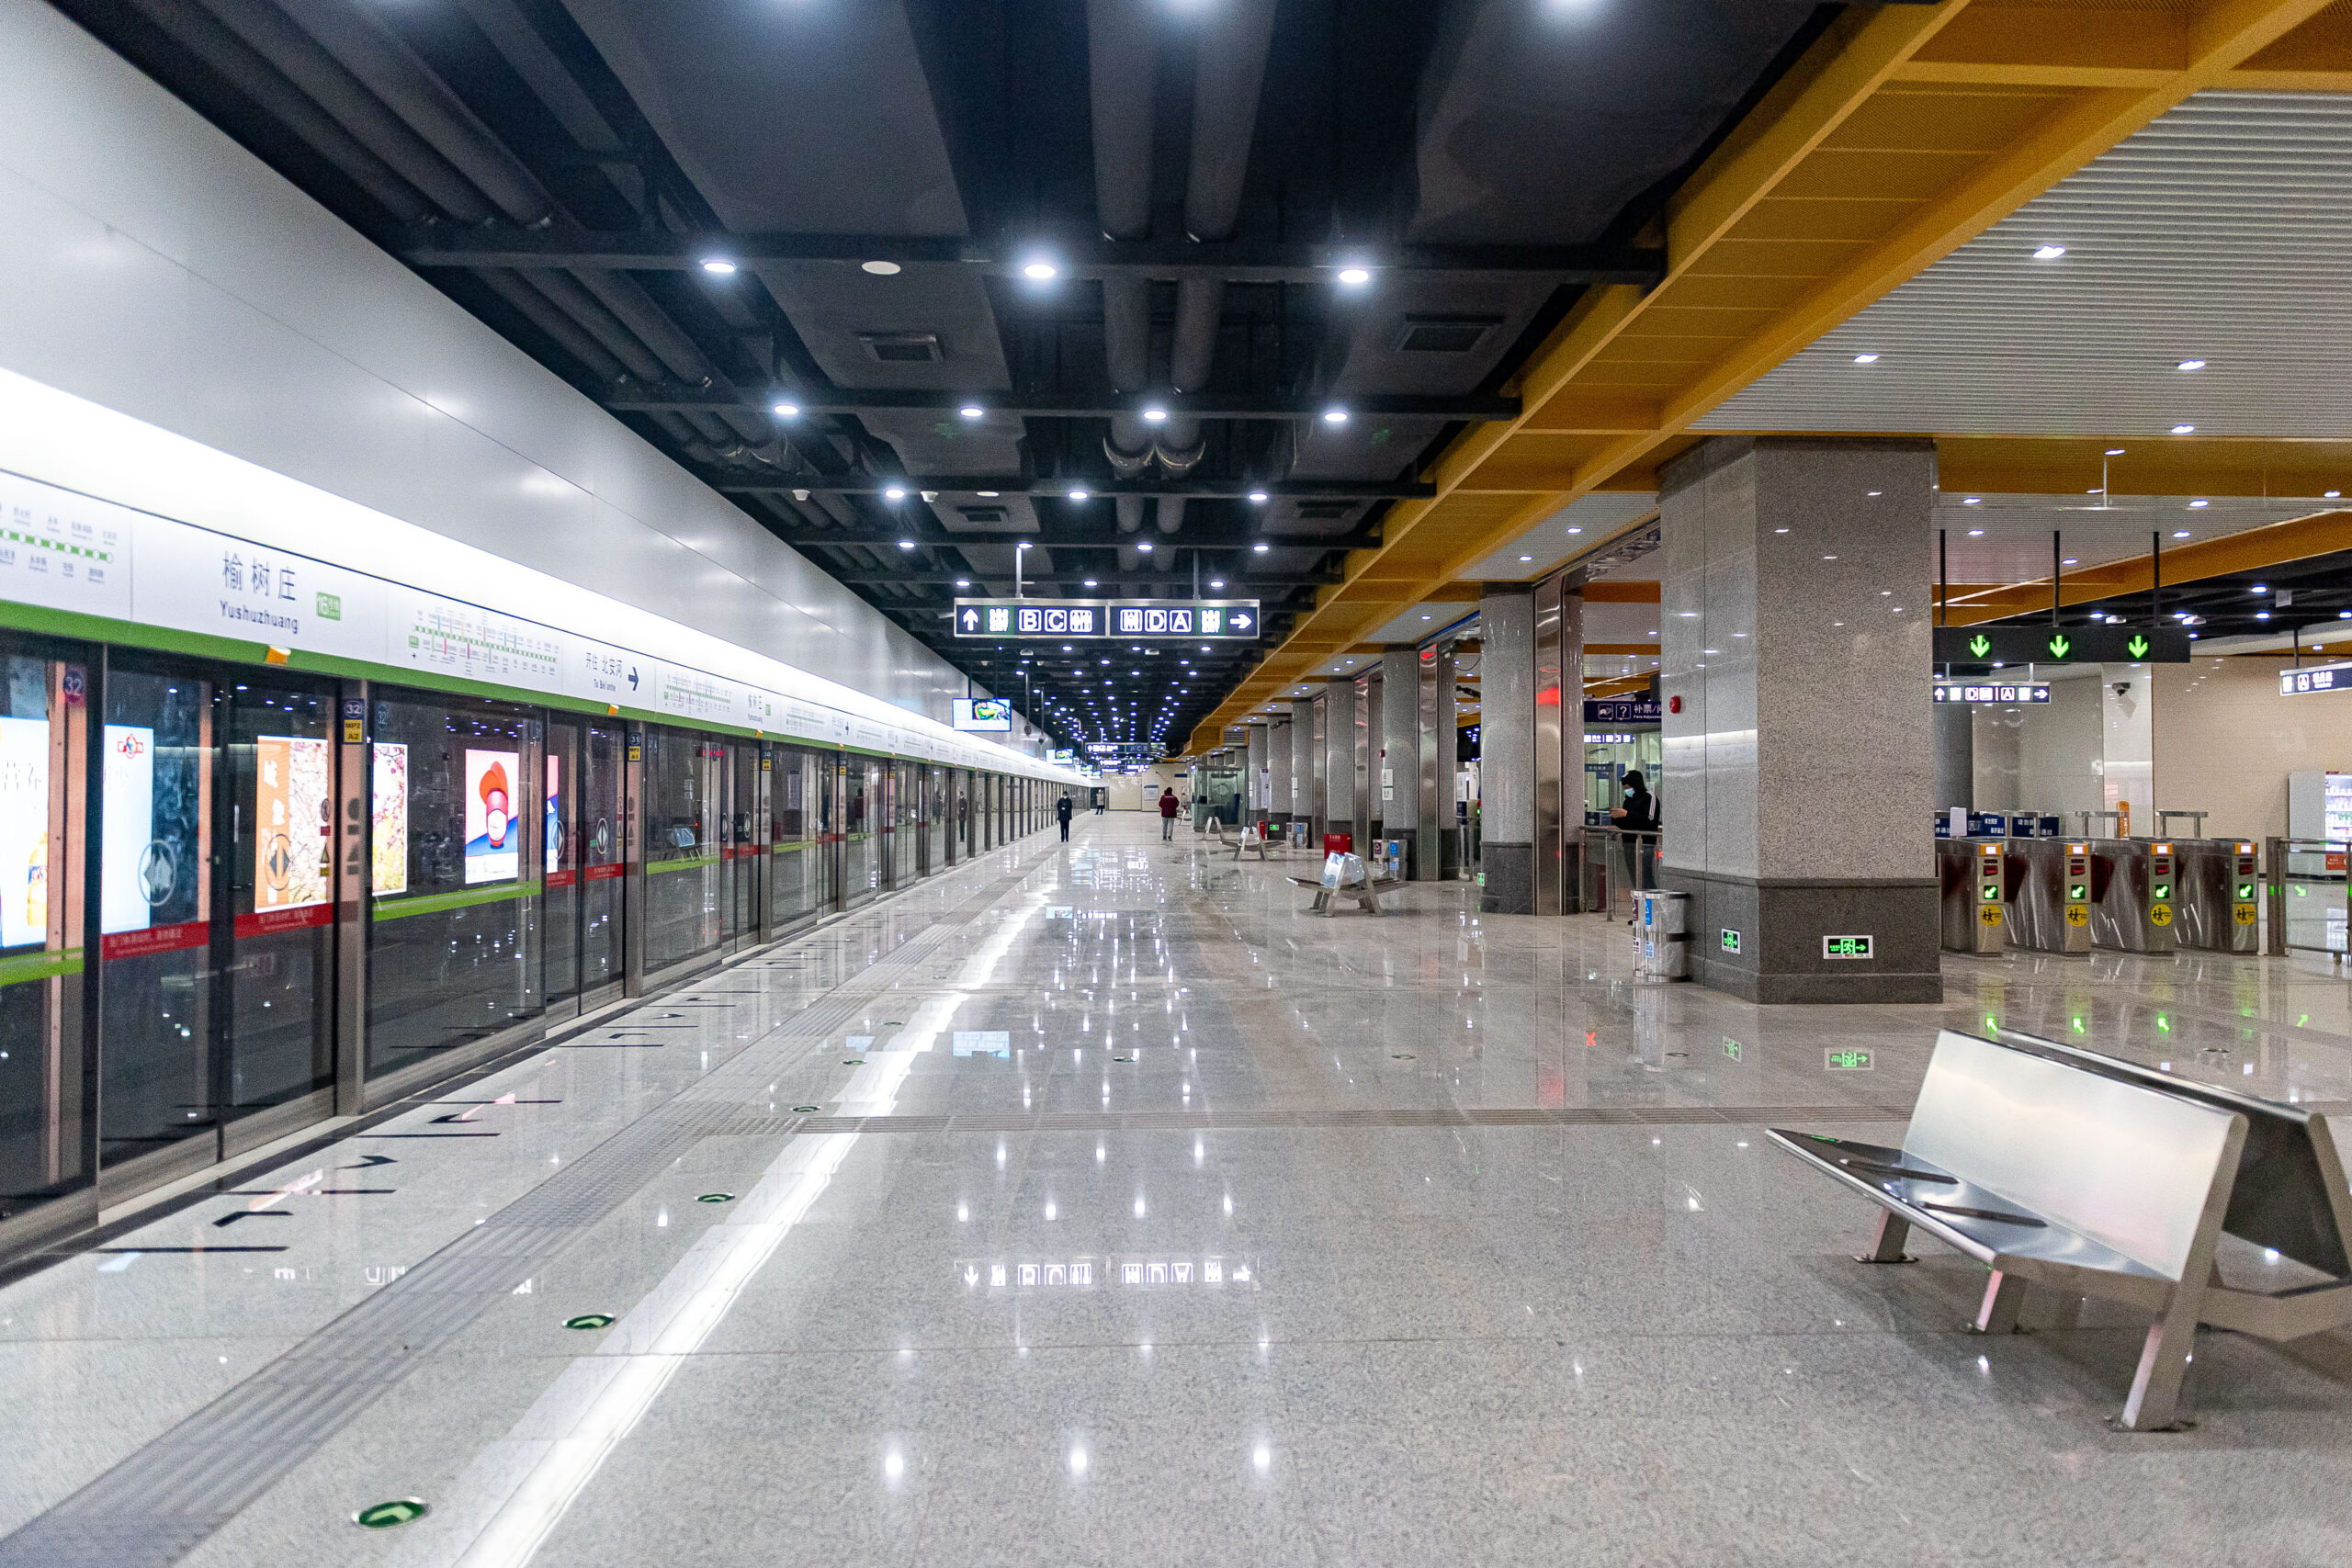 The newly opened Yushuzhuang Station